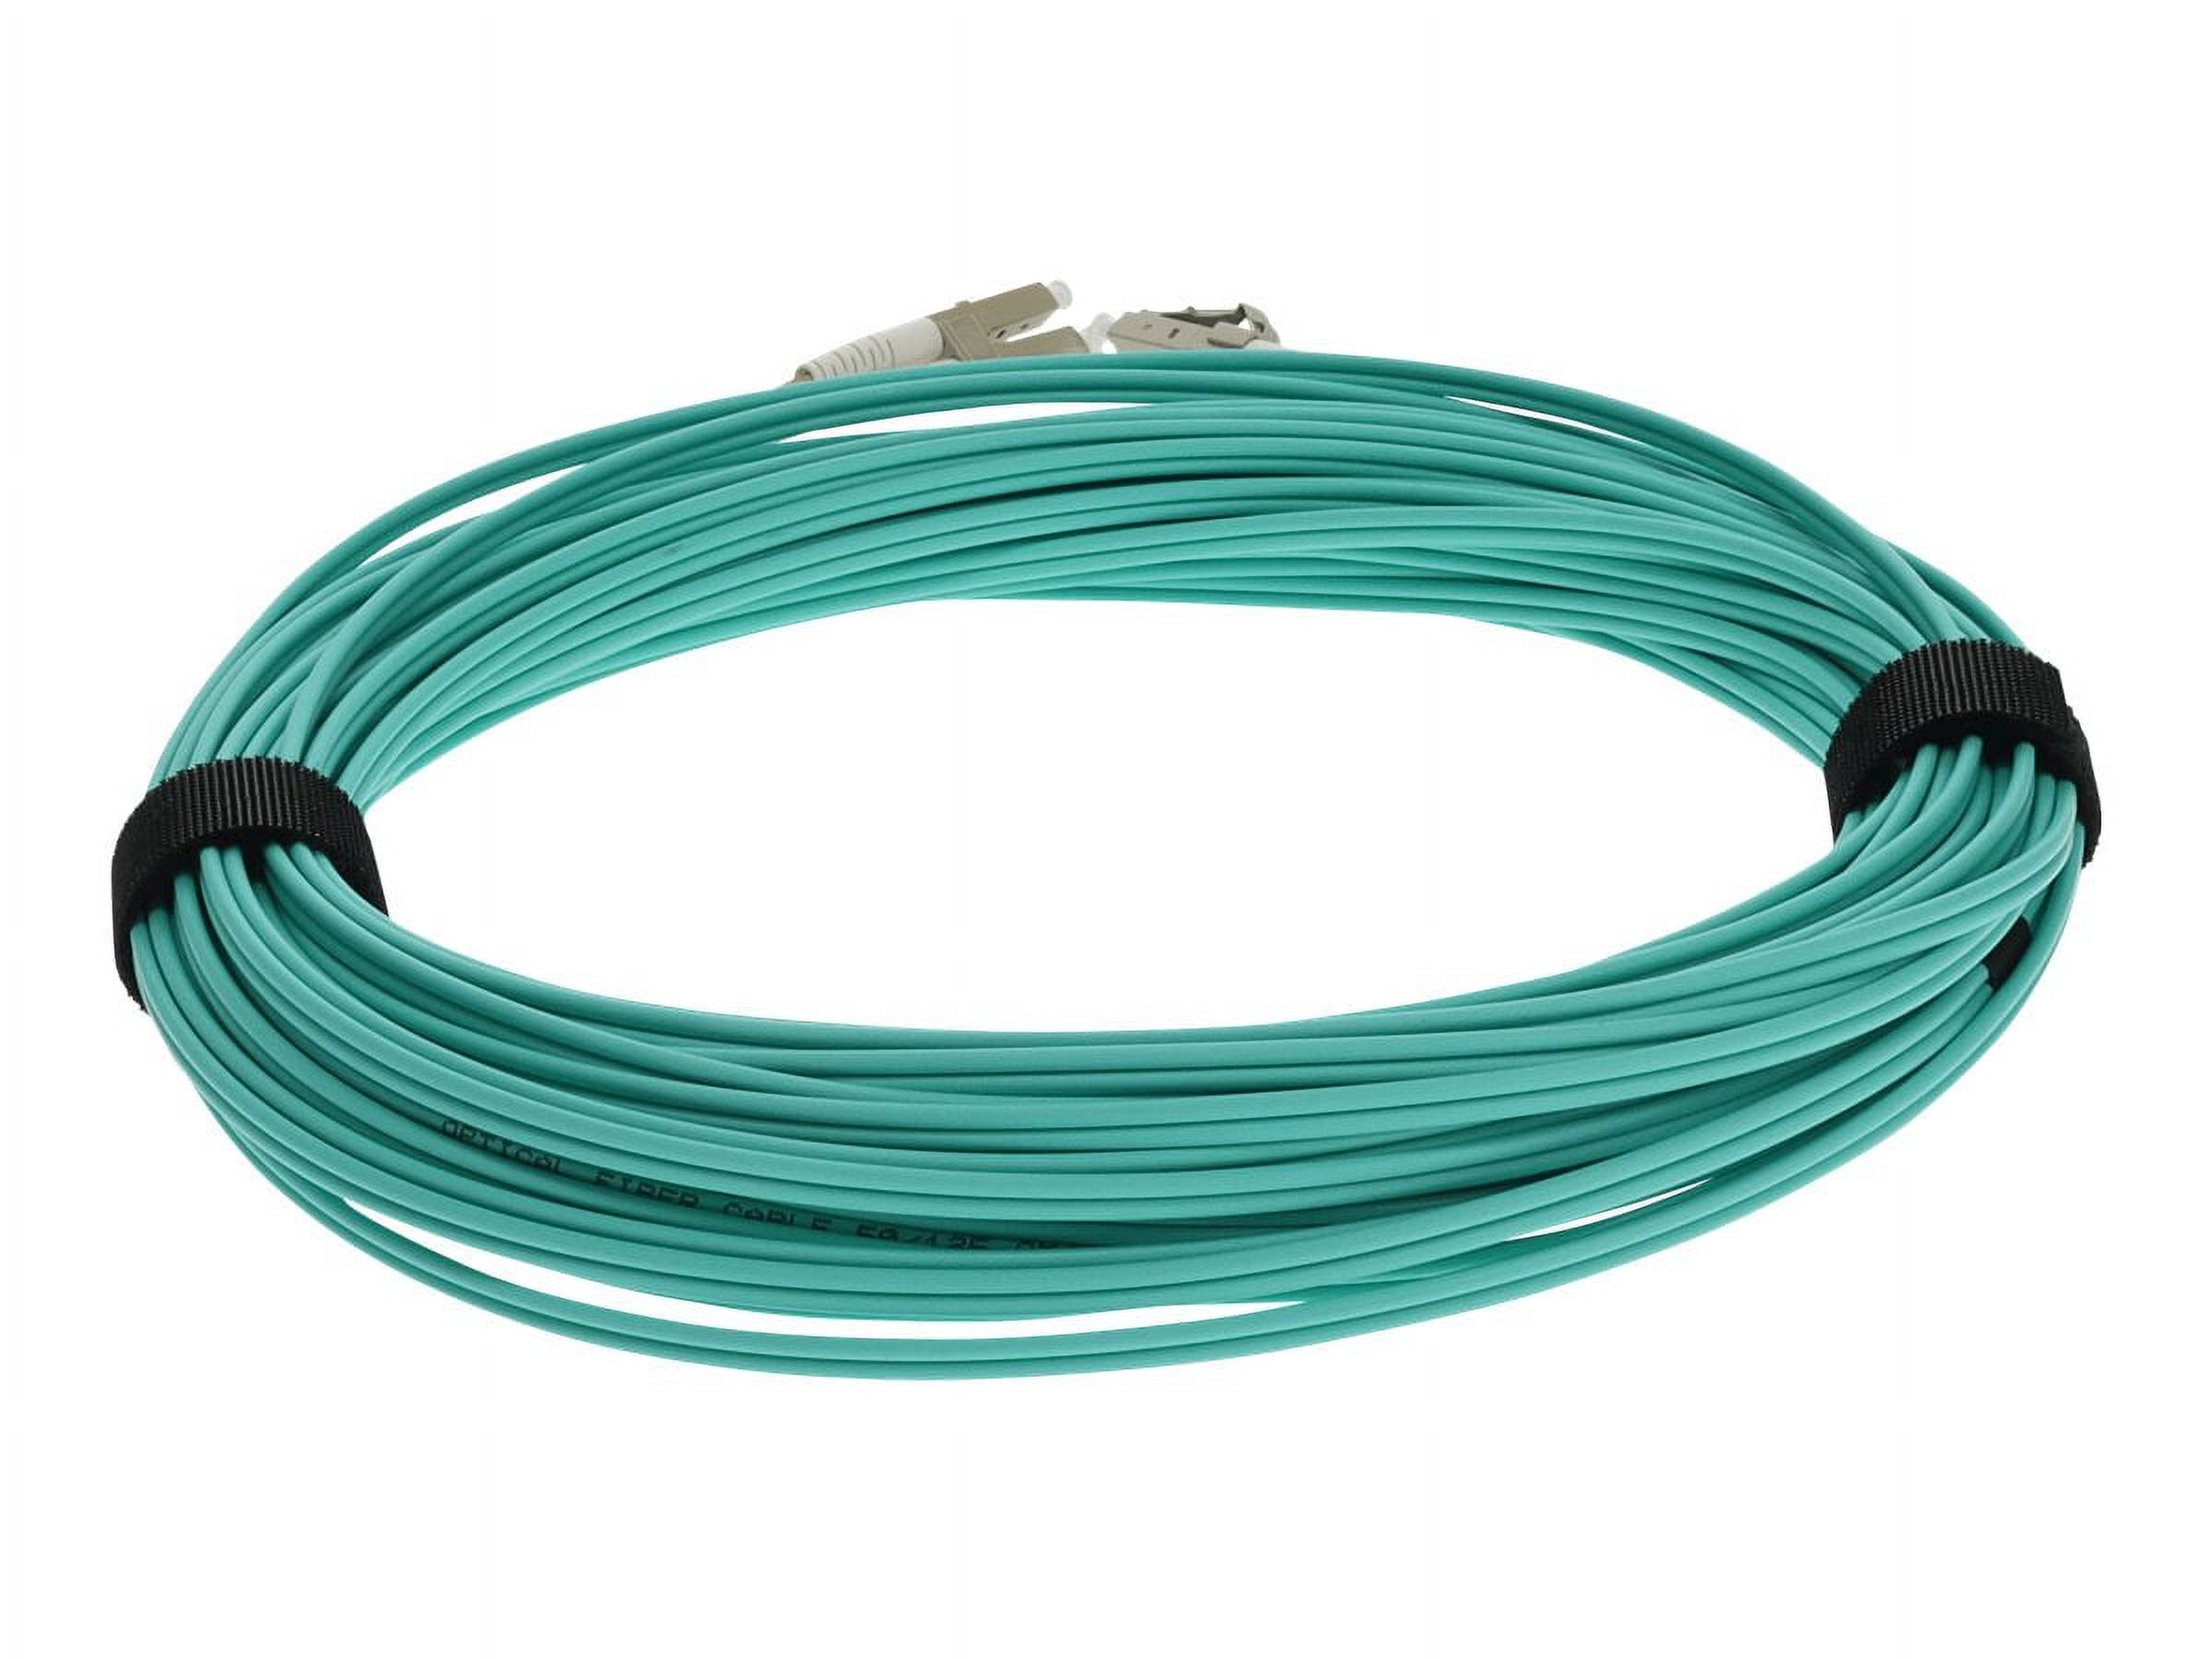 AddOn 50m LC OM3 Aqua Patch Cable - patch cable - 164 ft - aqua - image 5 of 8